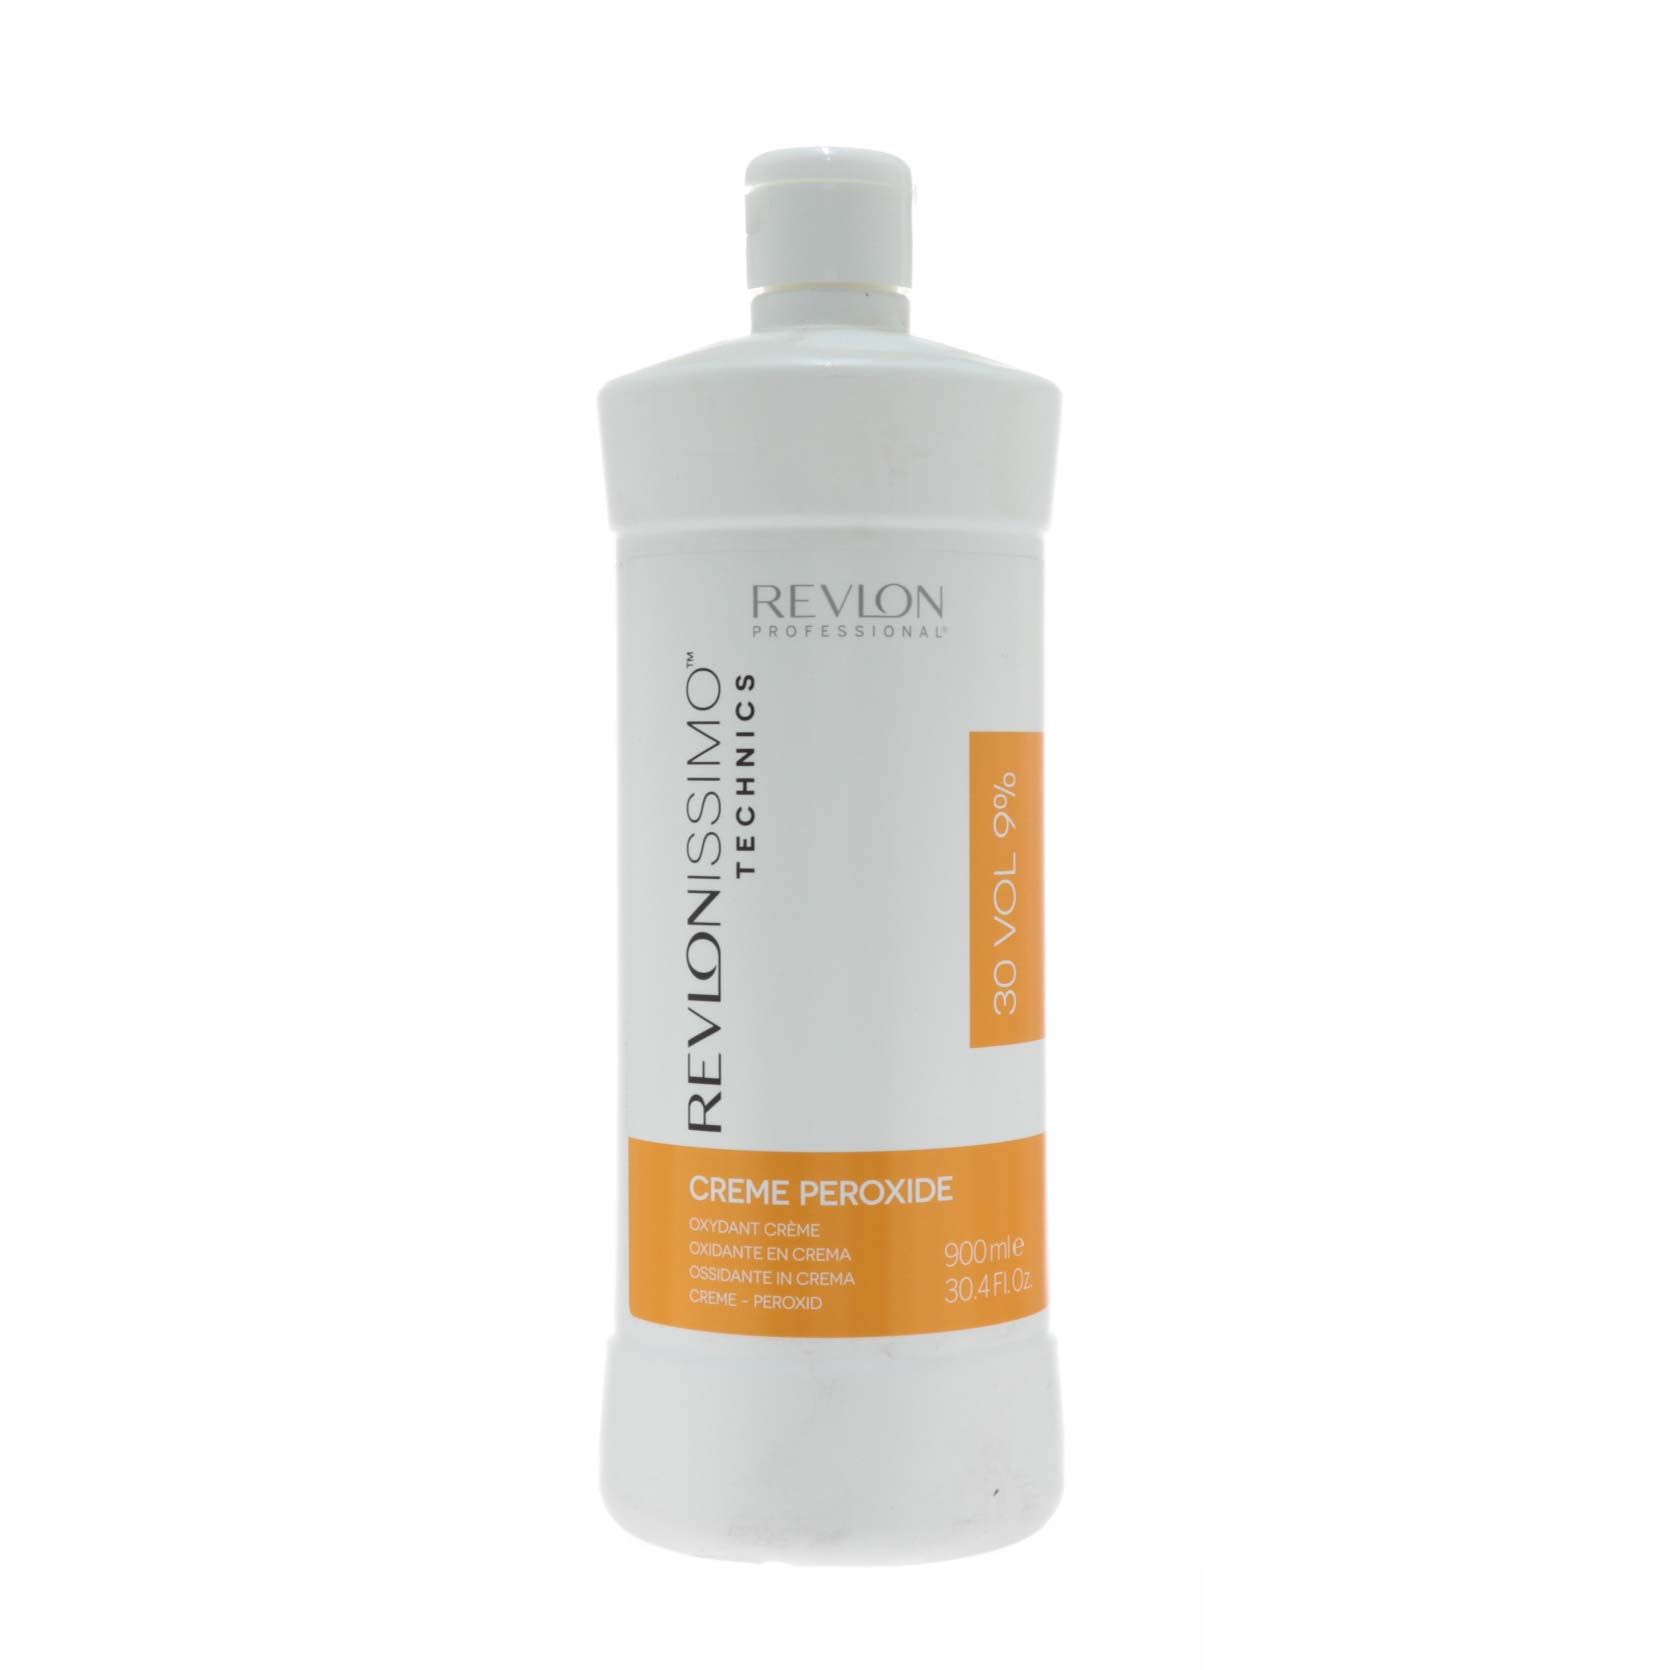 Проявитель Revlon Professional Creme Peroxide 9% 900 мл проявитель ollin professional oxy oxidizing emulsion 3% 1000 мл